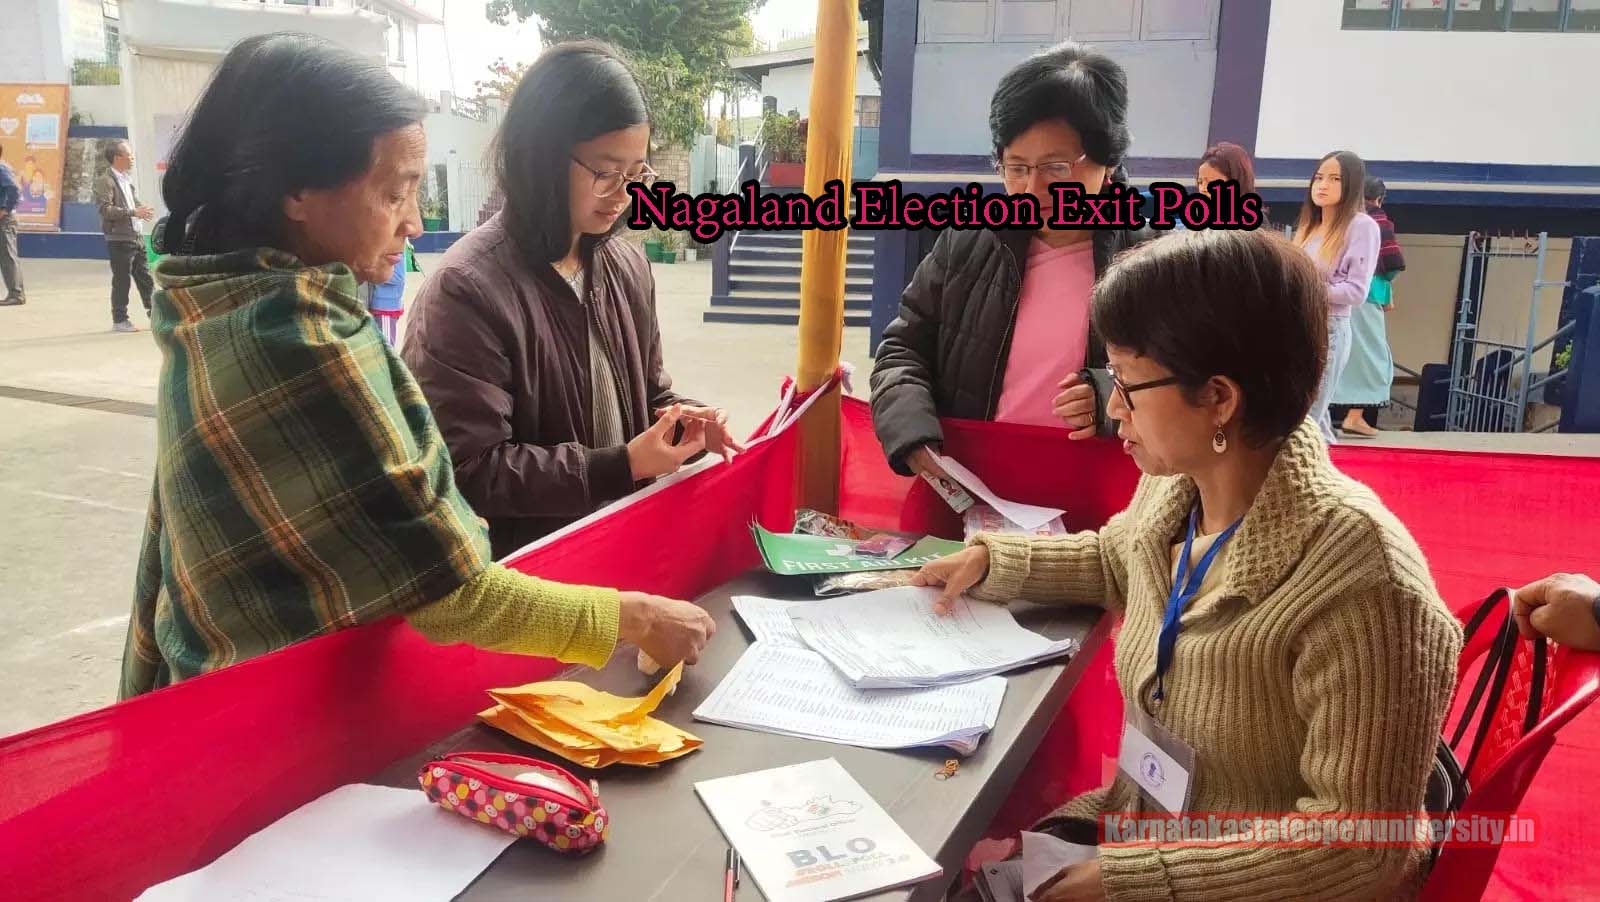 Nagaland Election Exit Polls